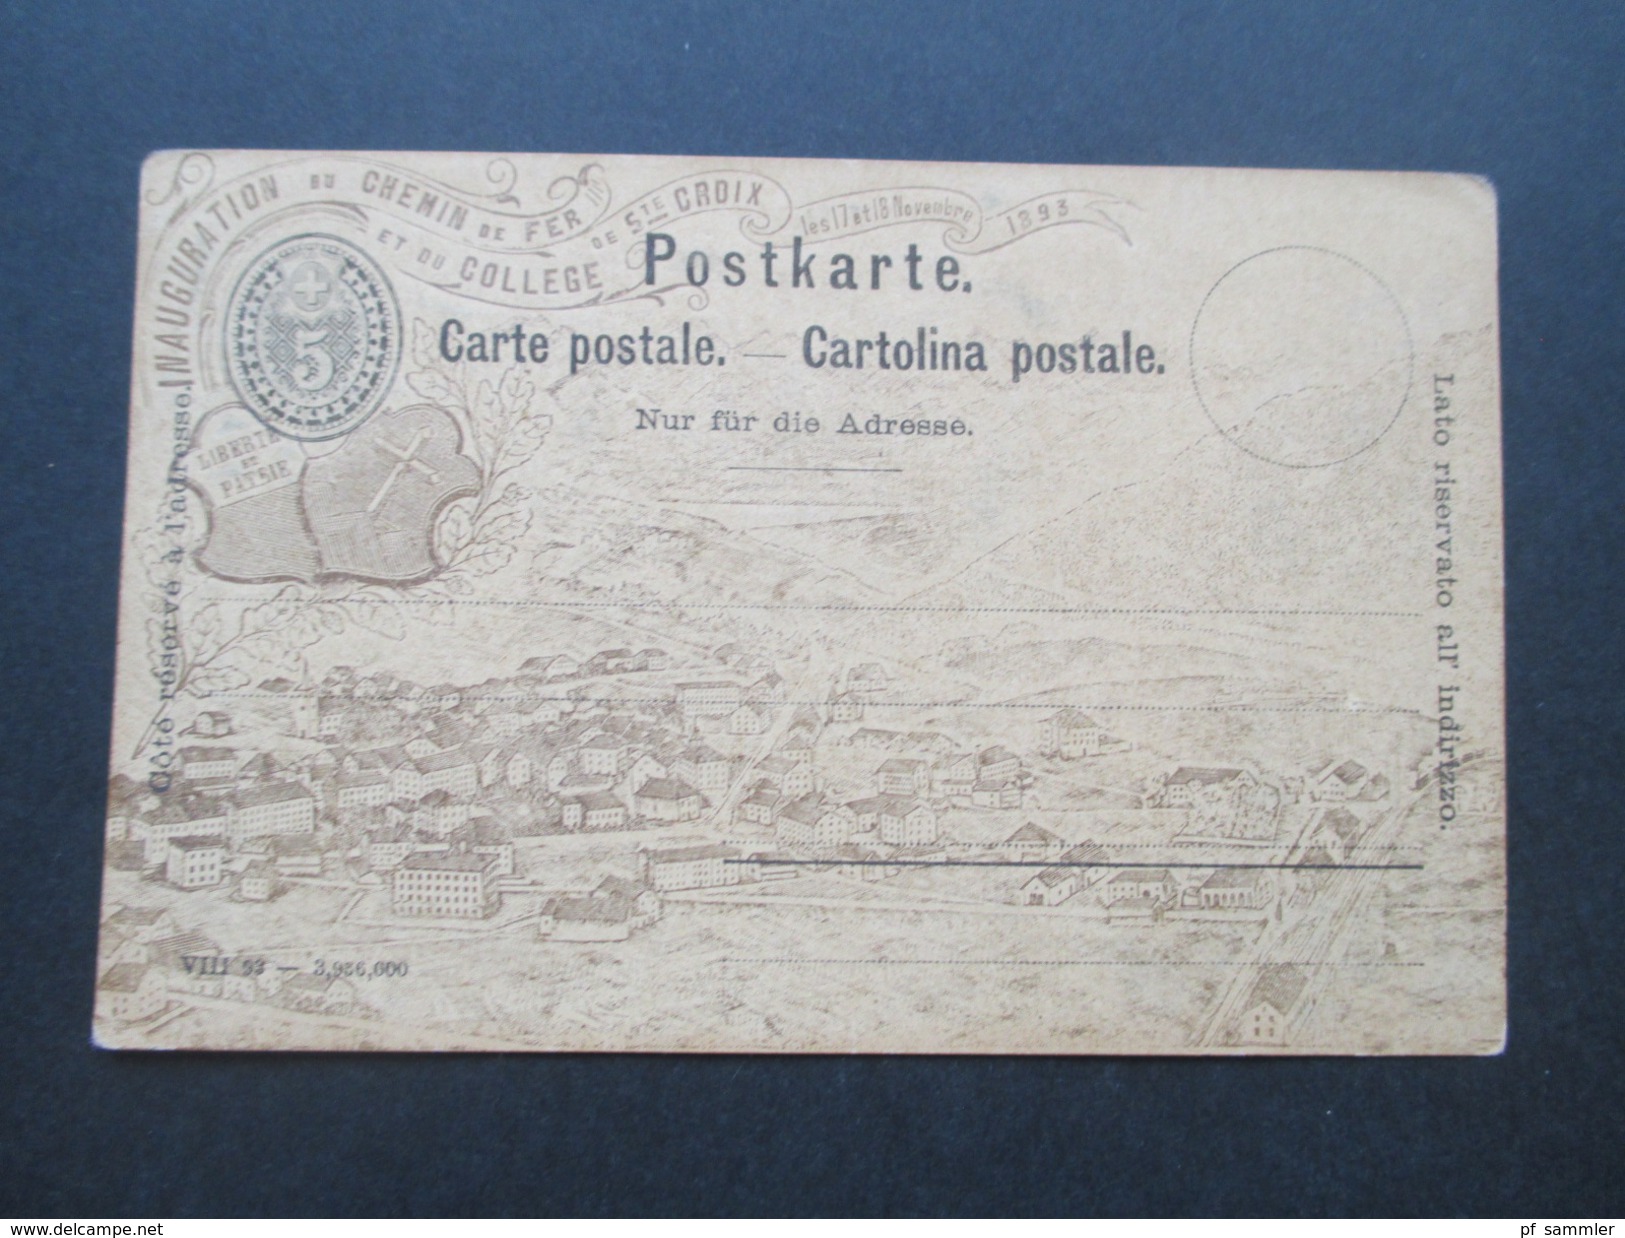 Schweiz 1893 Sonderkarte / Privatganzsachen?! Inauguration Chemin de Fer / Ste. Croix. 2 Karten. Liberte et Partrie